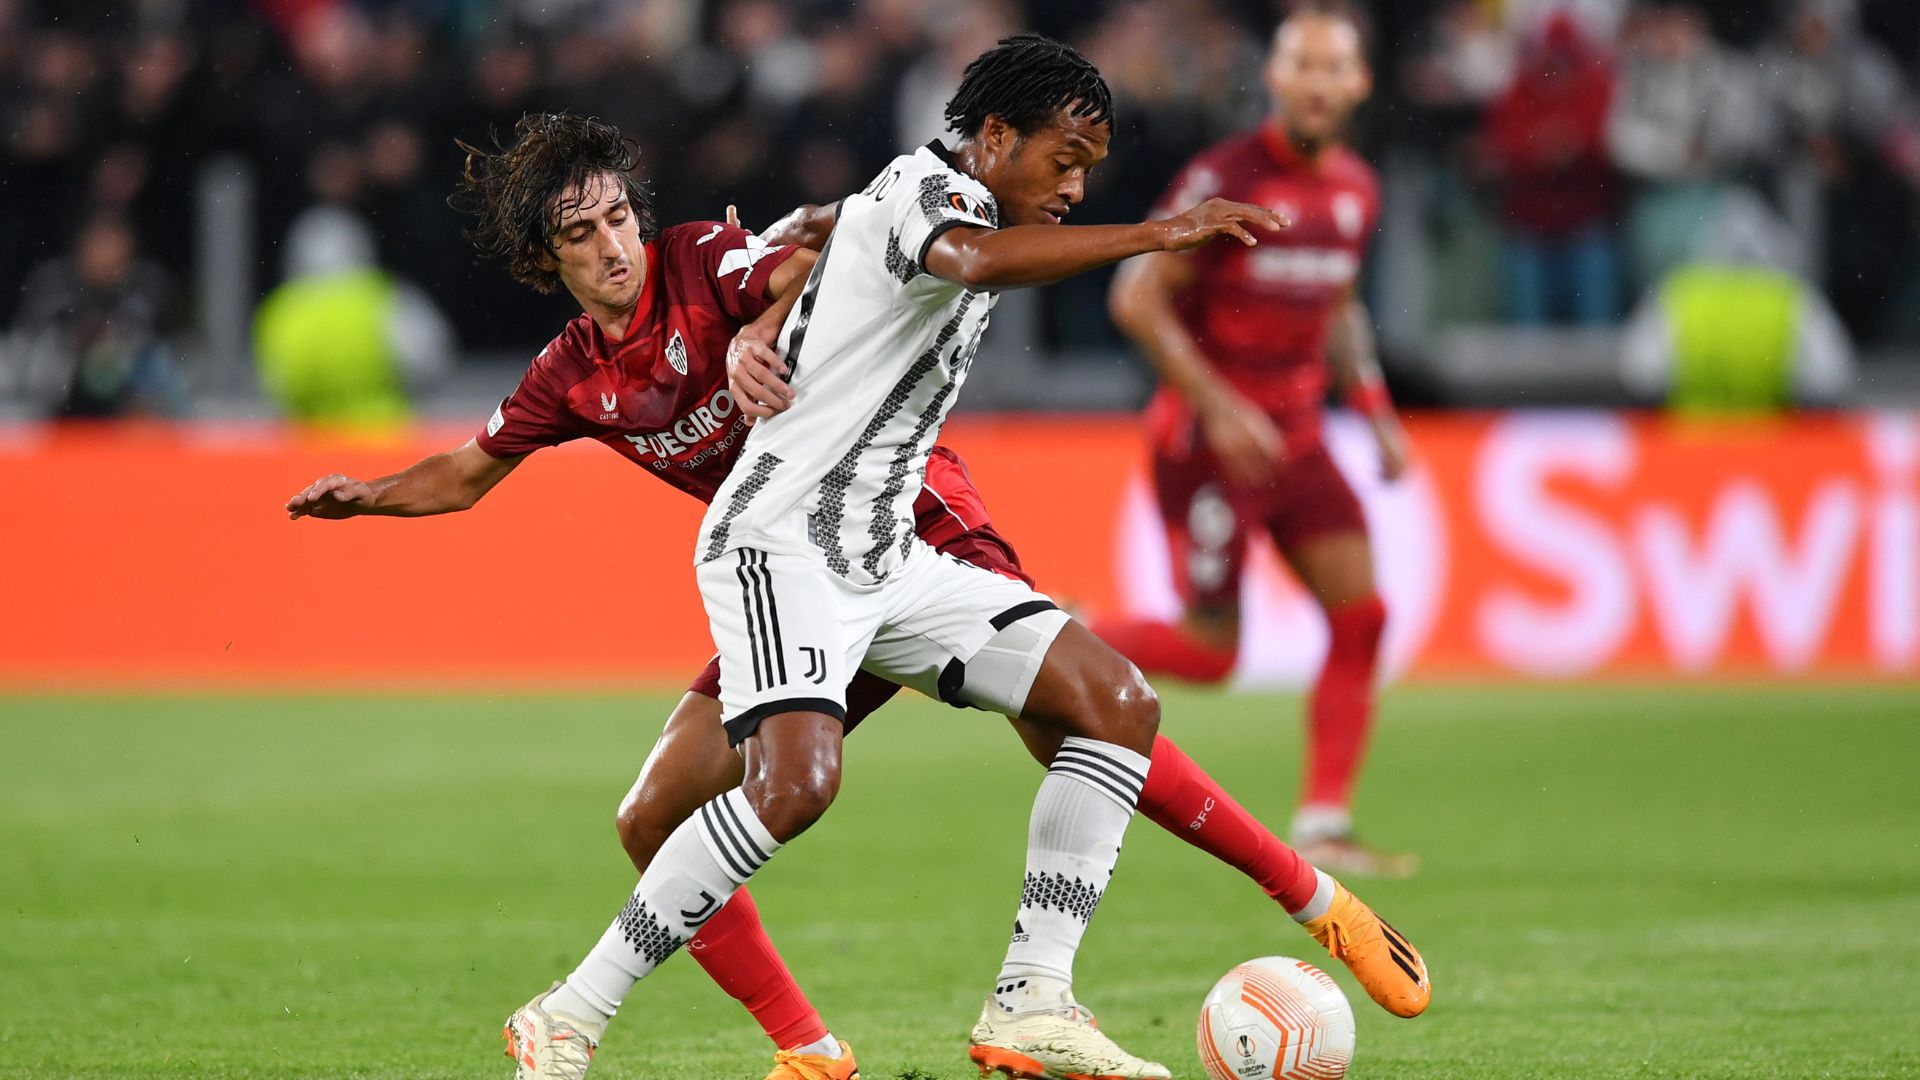 Jogo duro entre Juventus e Sevilla (Crédito: Getty Images)